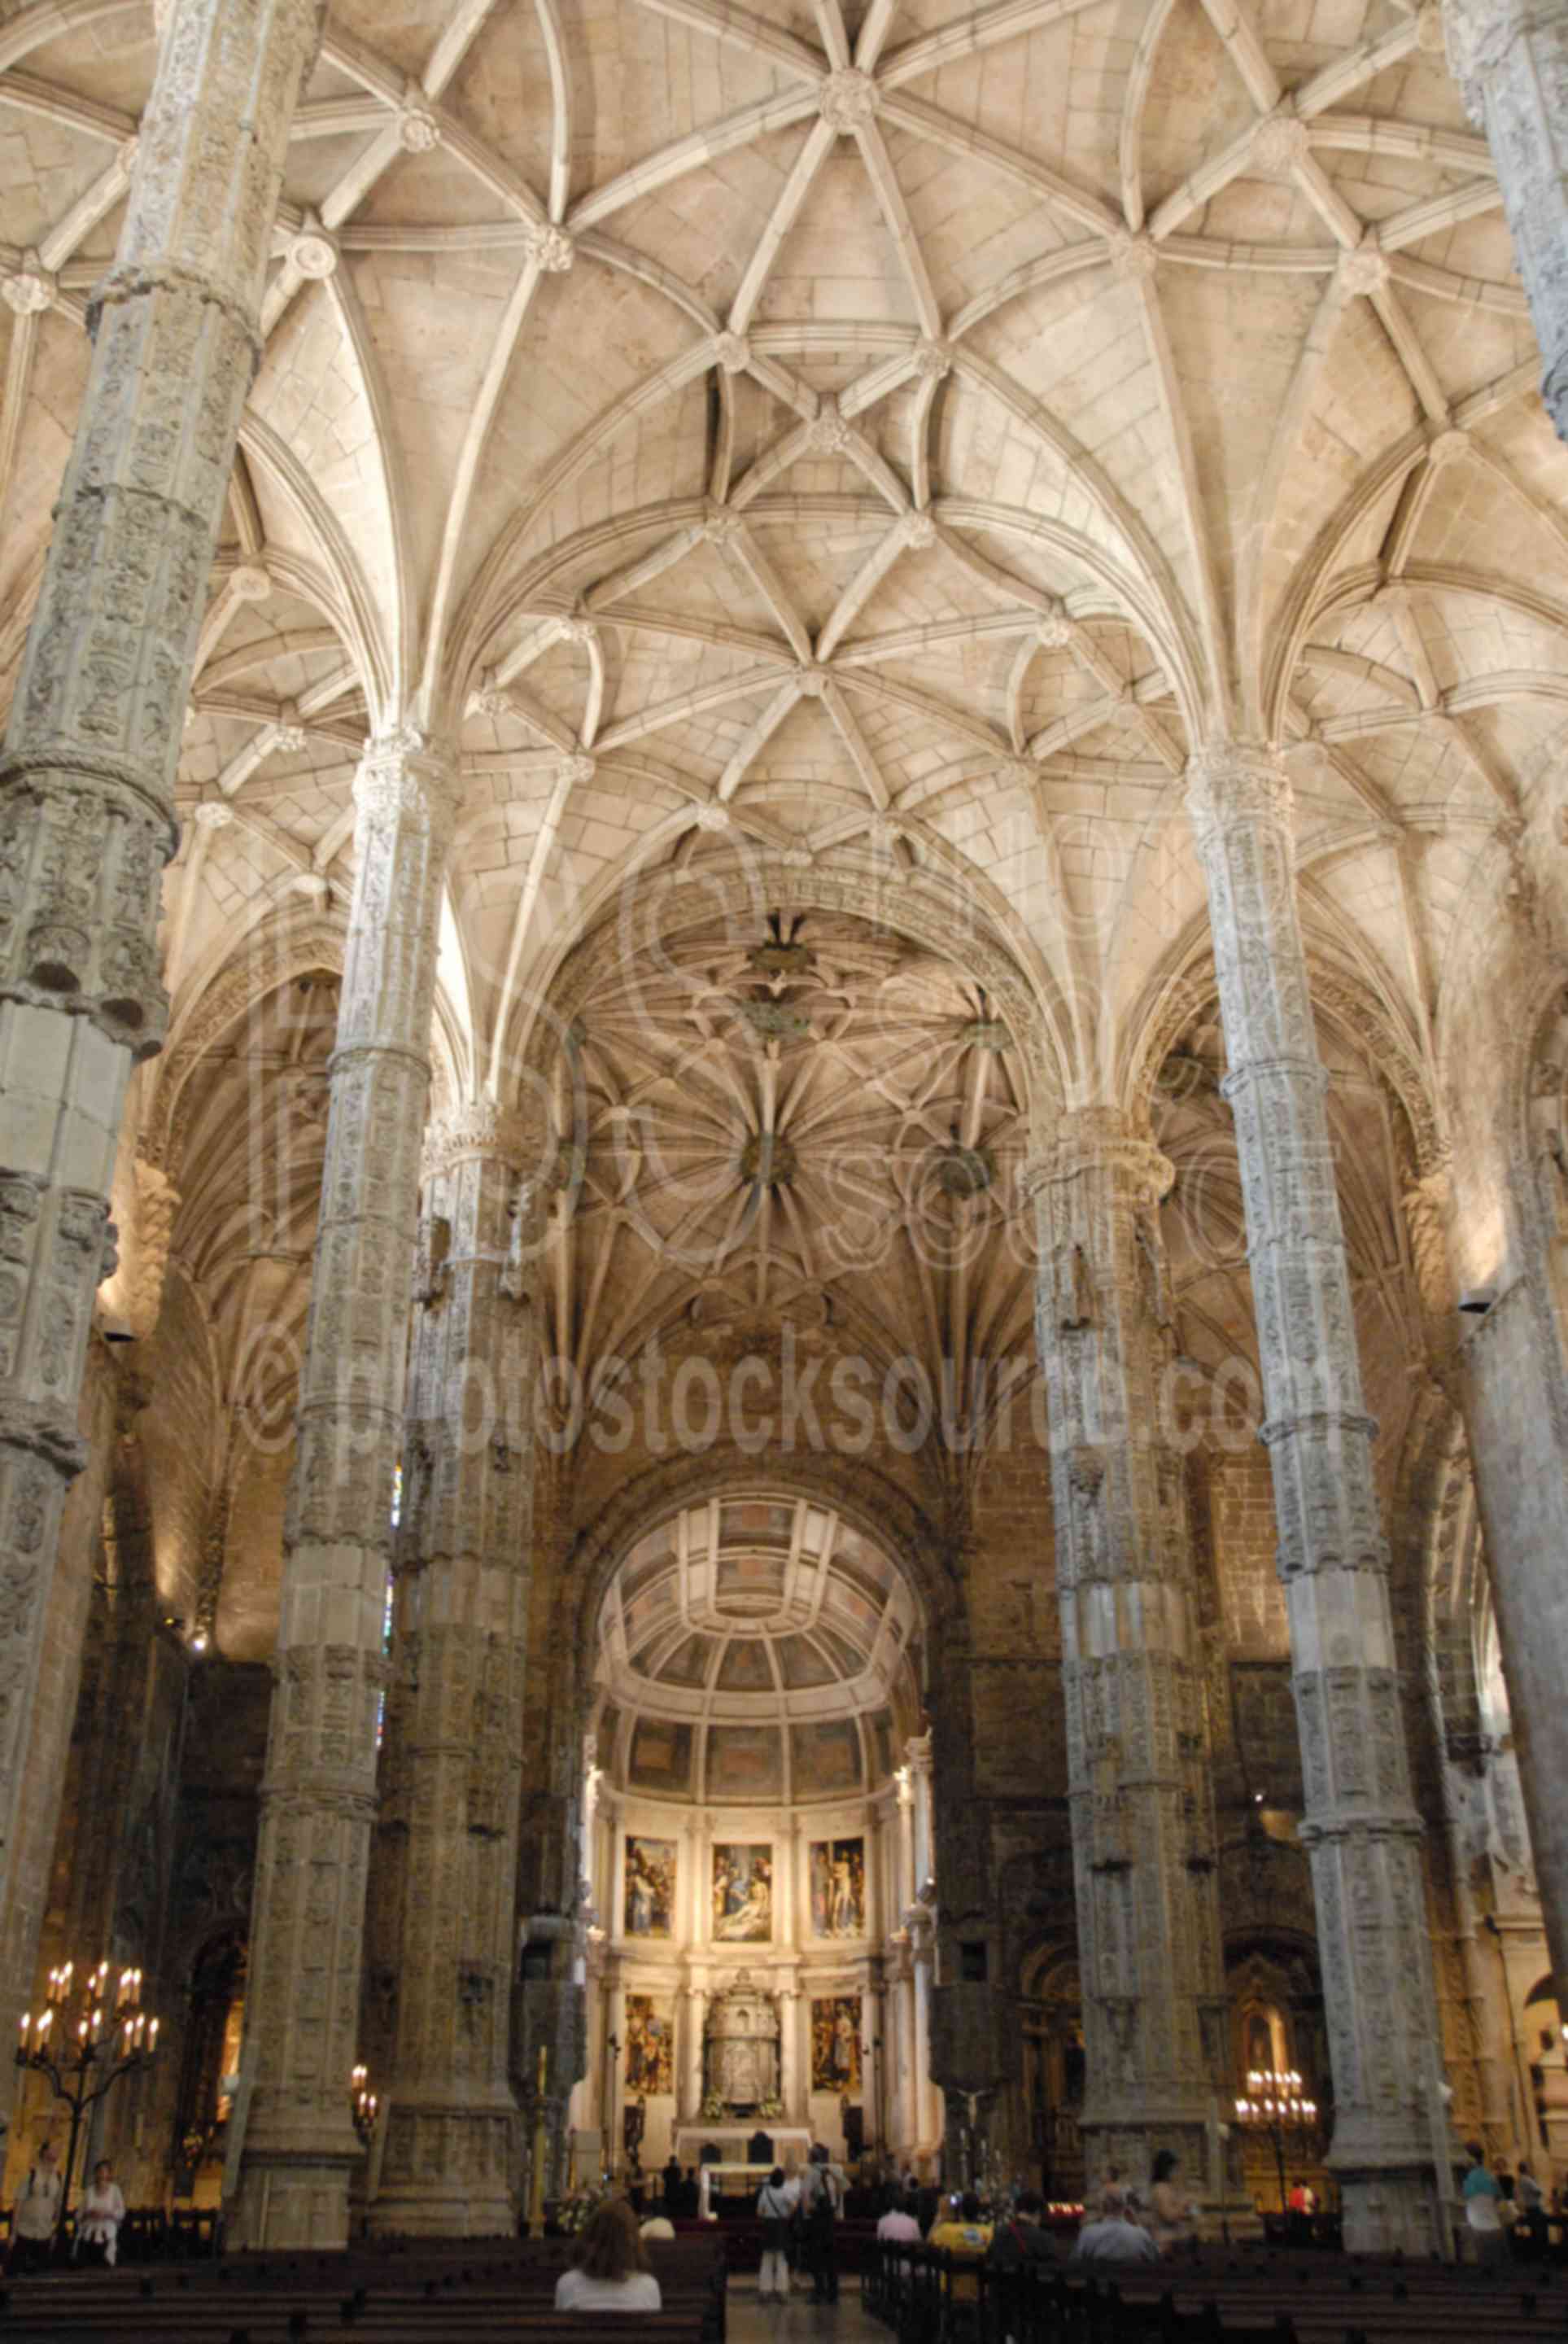 Church of Santa Maria de Belem,mosteiro dos jeronimos,architecture,manueline,king manuel,jeronimos monastery,churches,religion